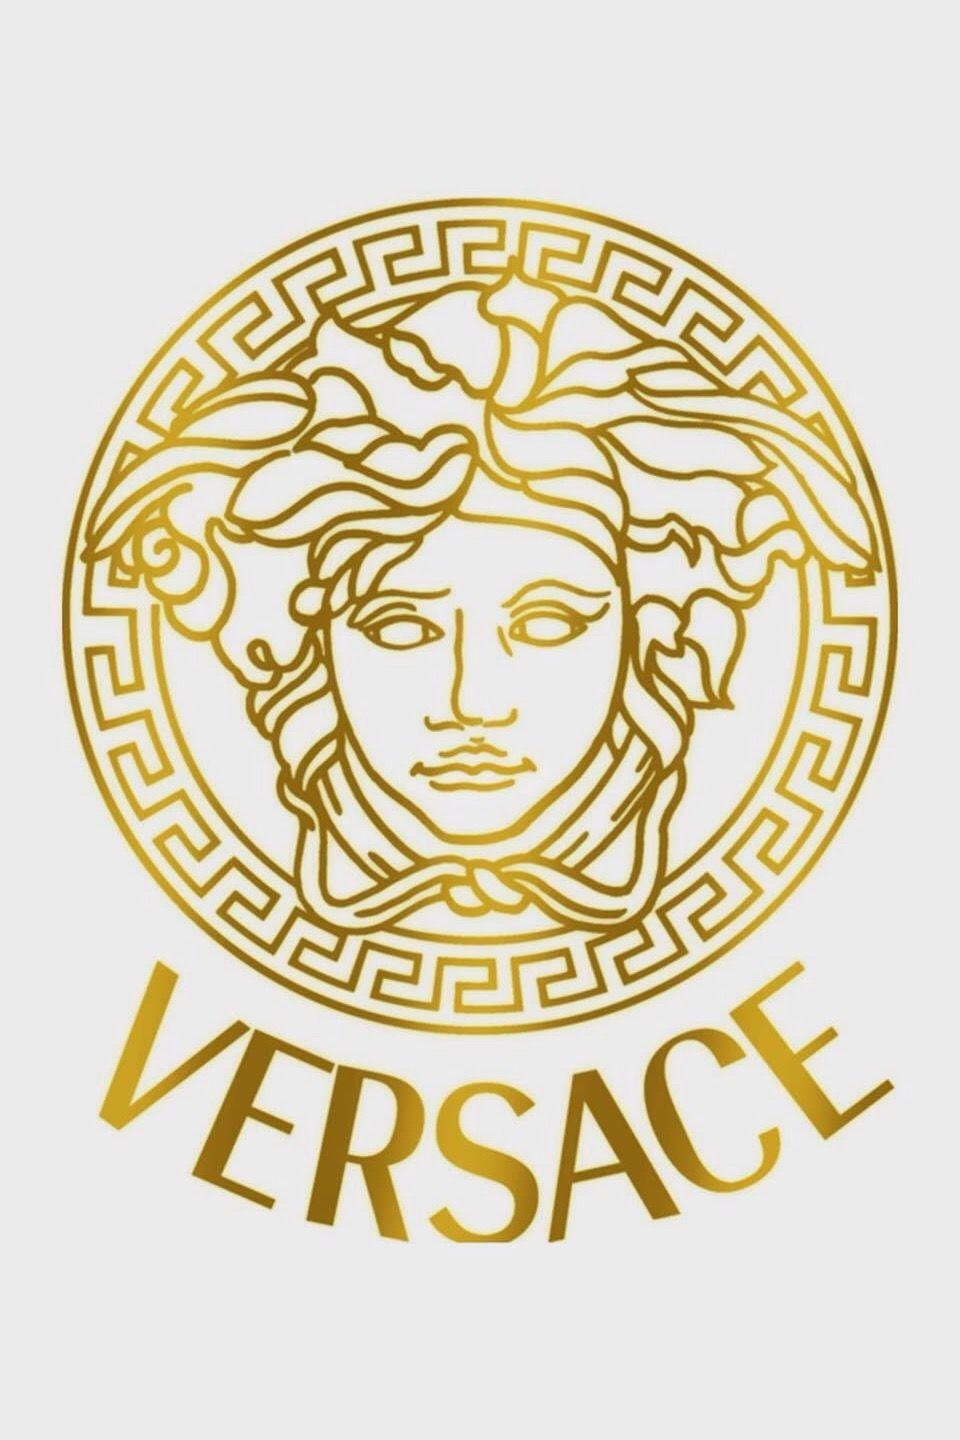 Logos. Versace, Versace logo and Gianni